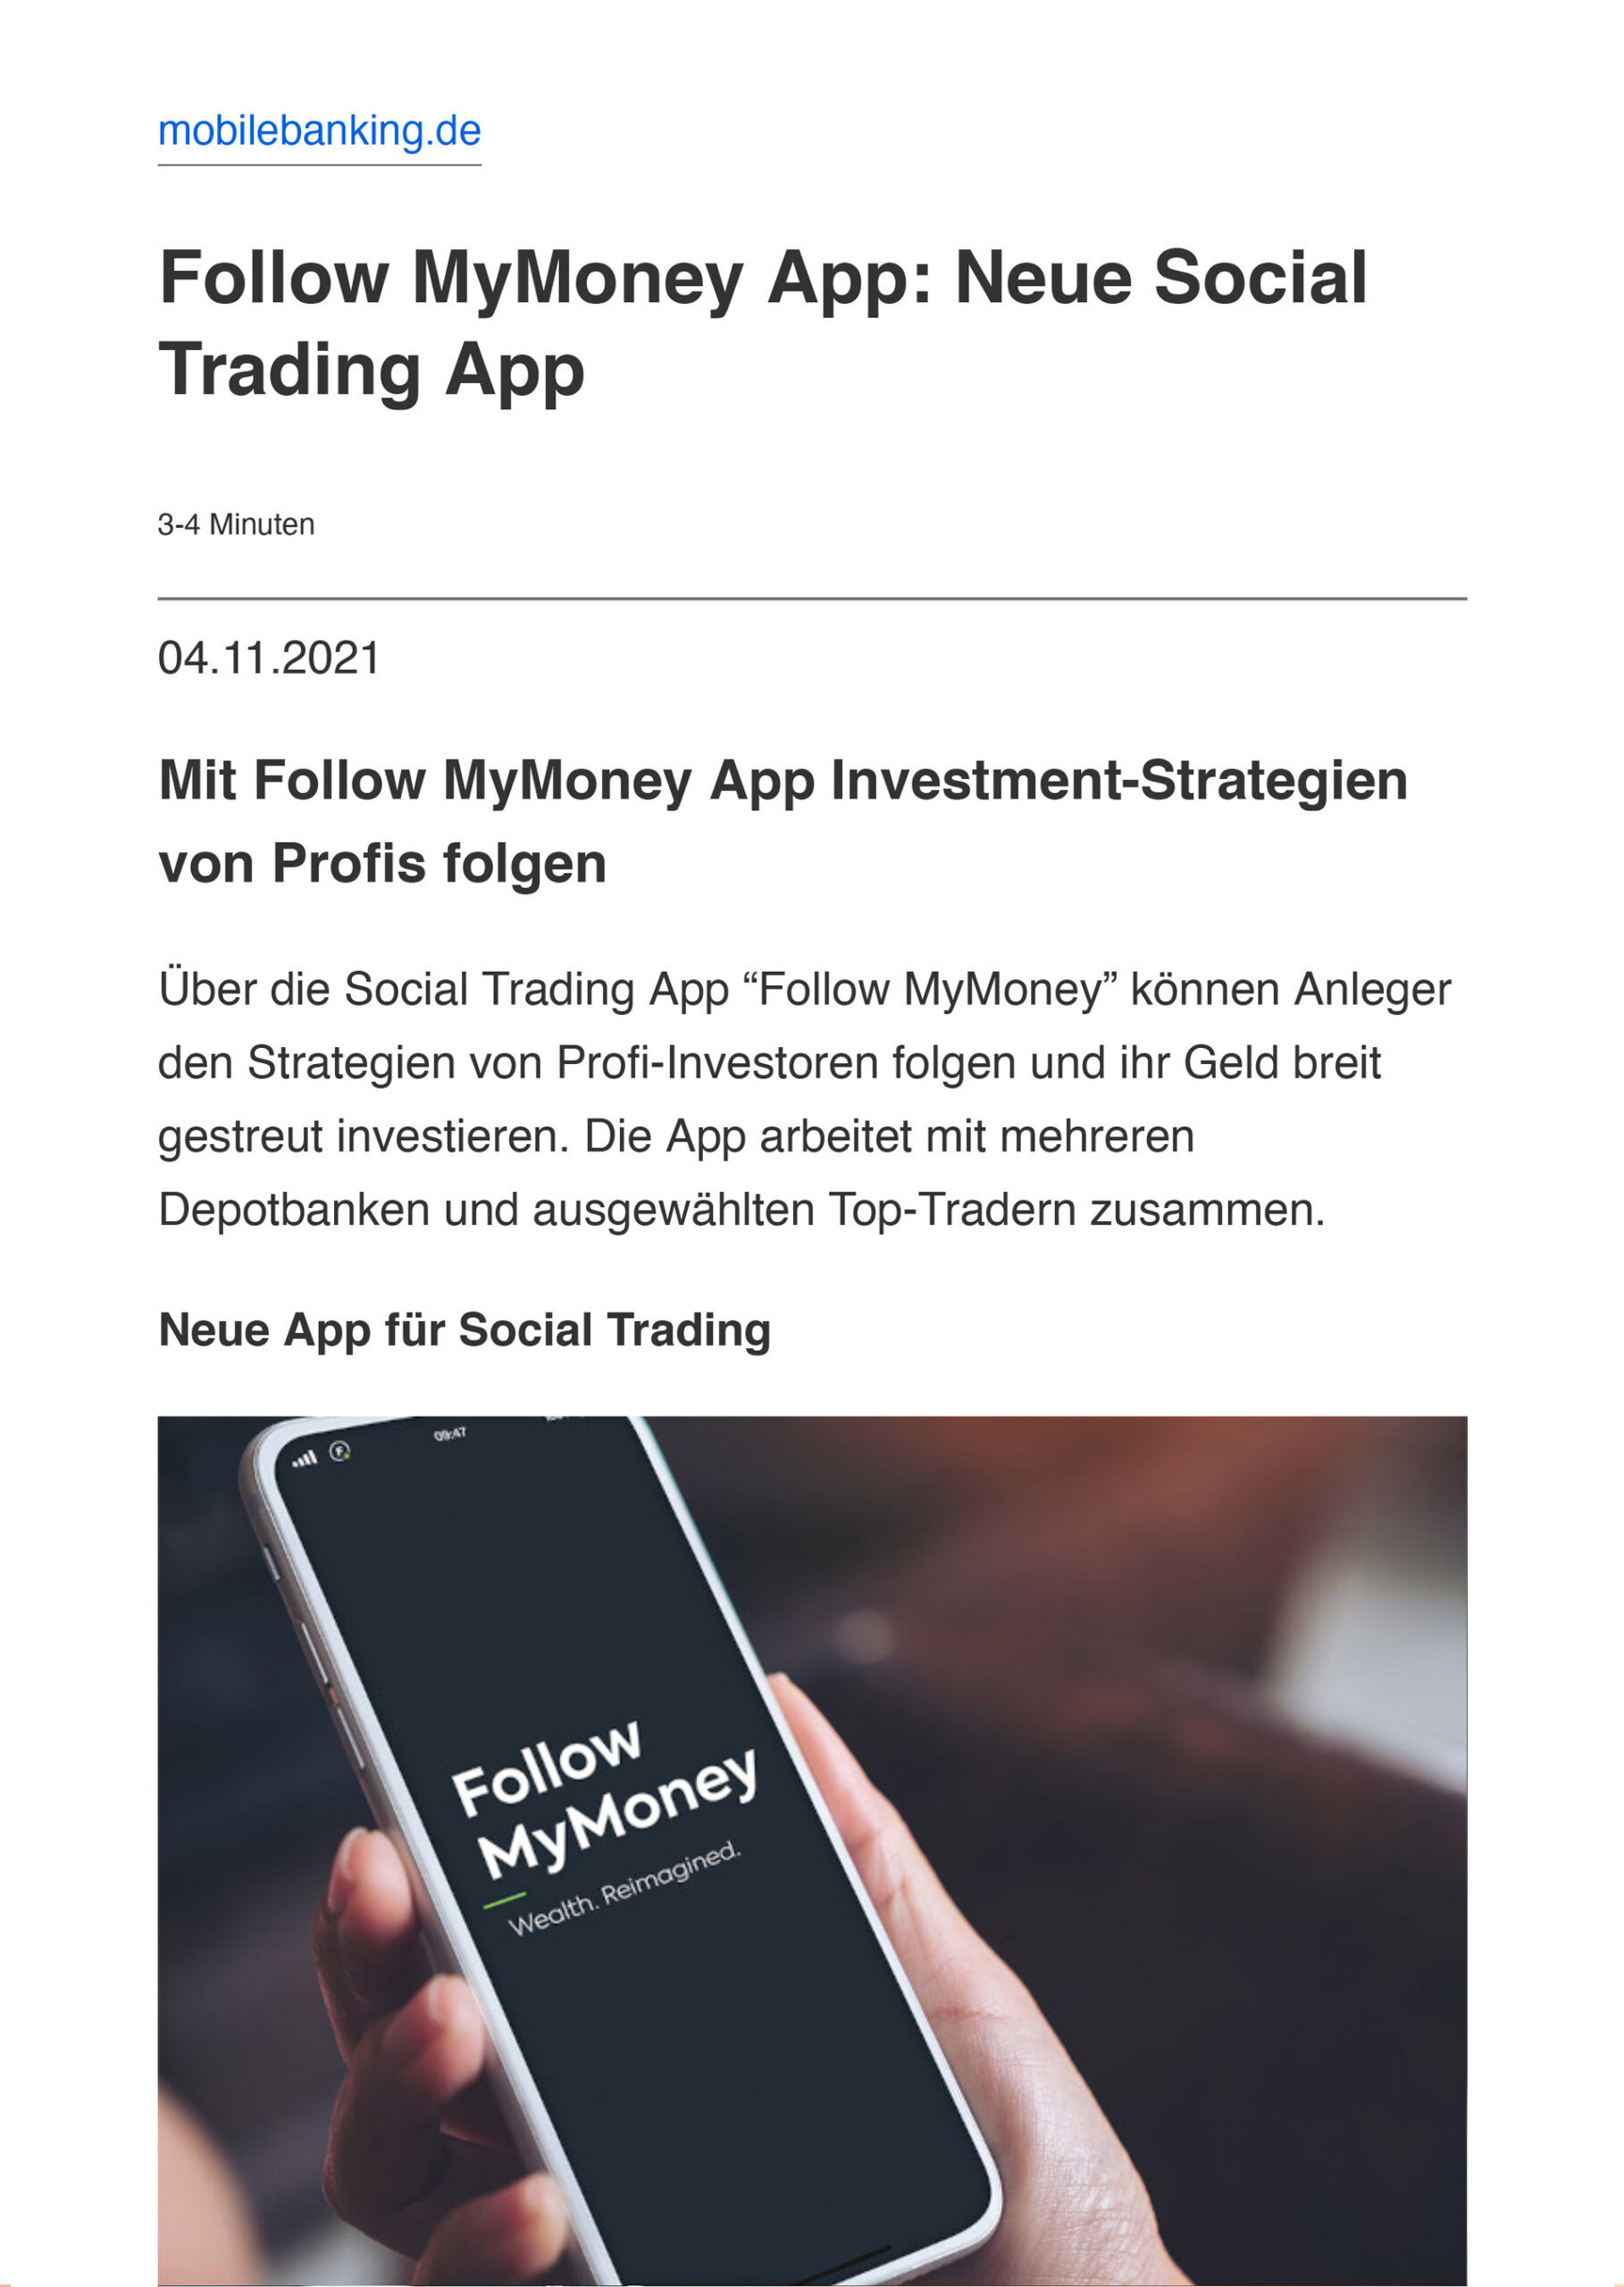 Artikel über Follow MyMoney in mobilebanking.de, 4. November 2021